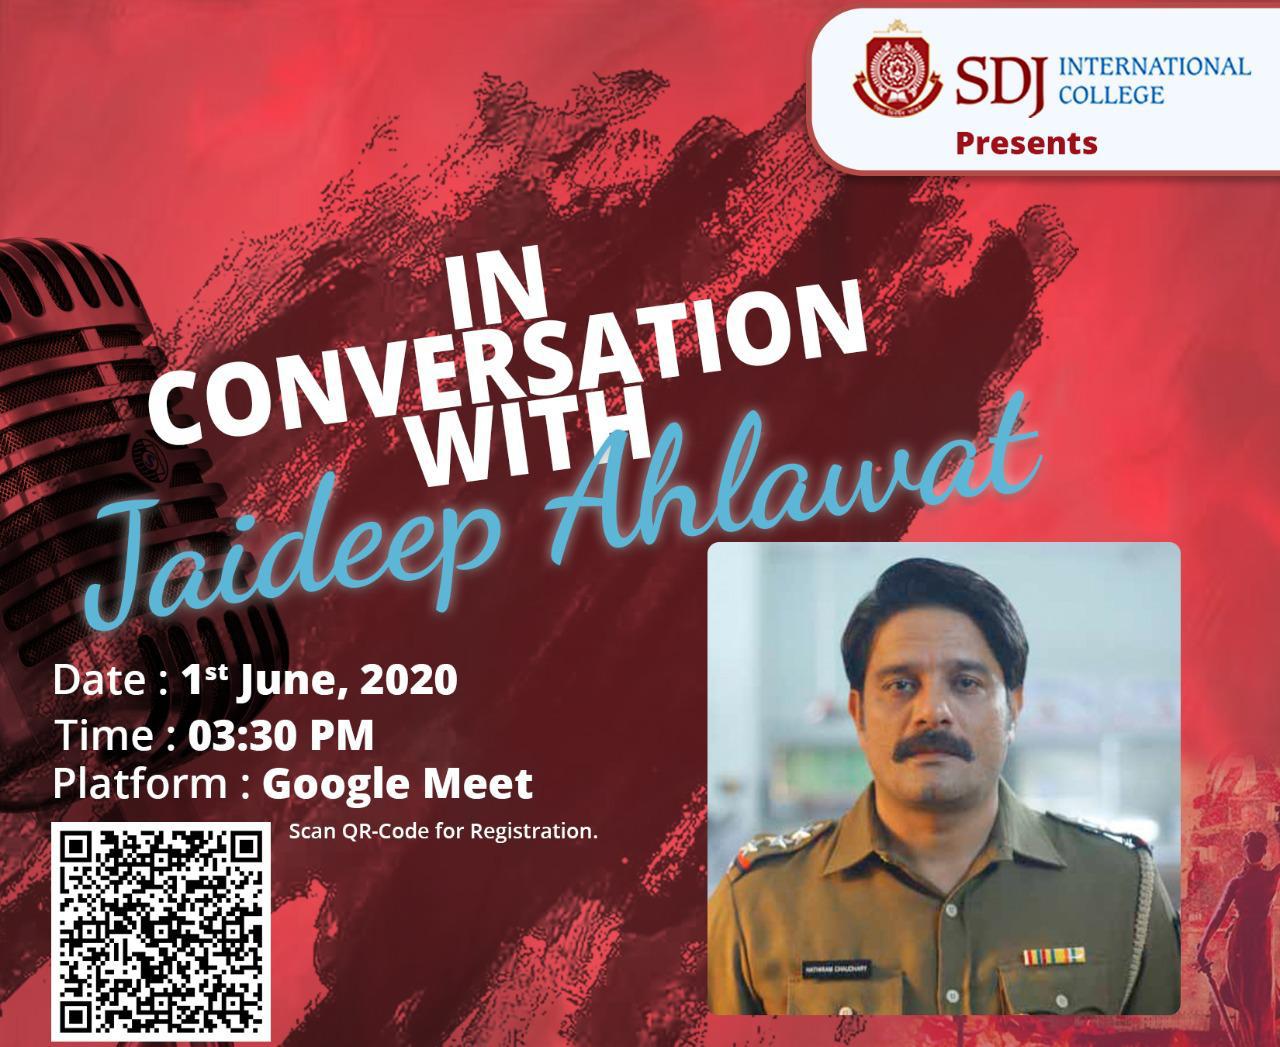 “In Conversation with Jaideep Ahlawat” online talk show organized by SDJ International College.